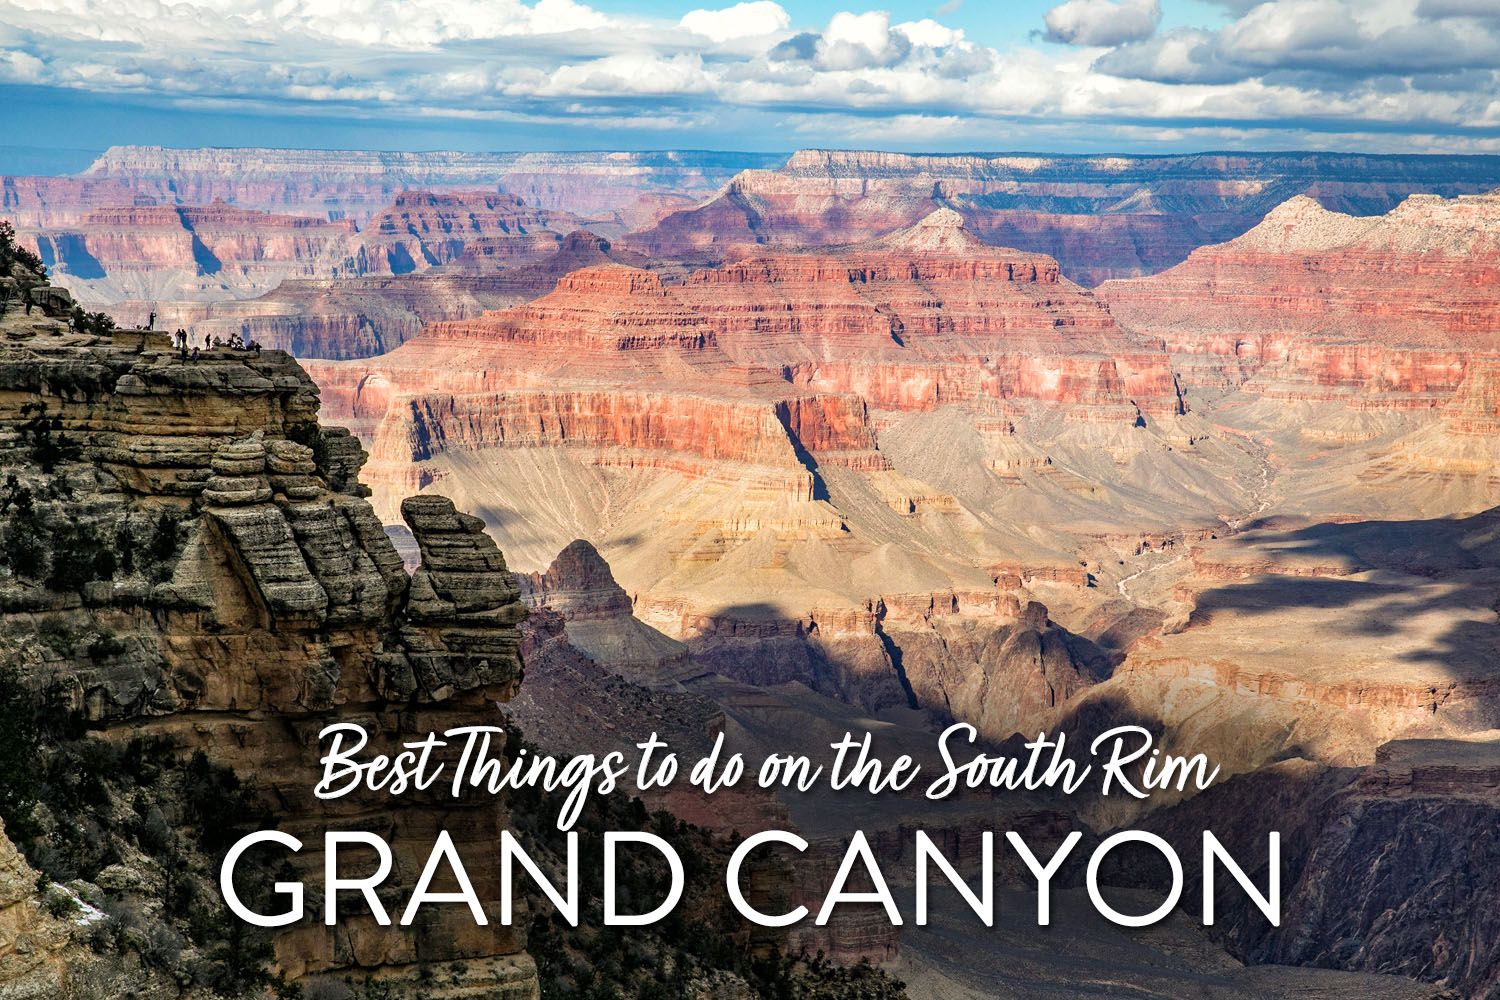 Grand Canyon to do list